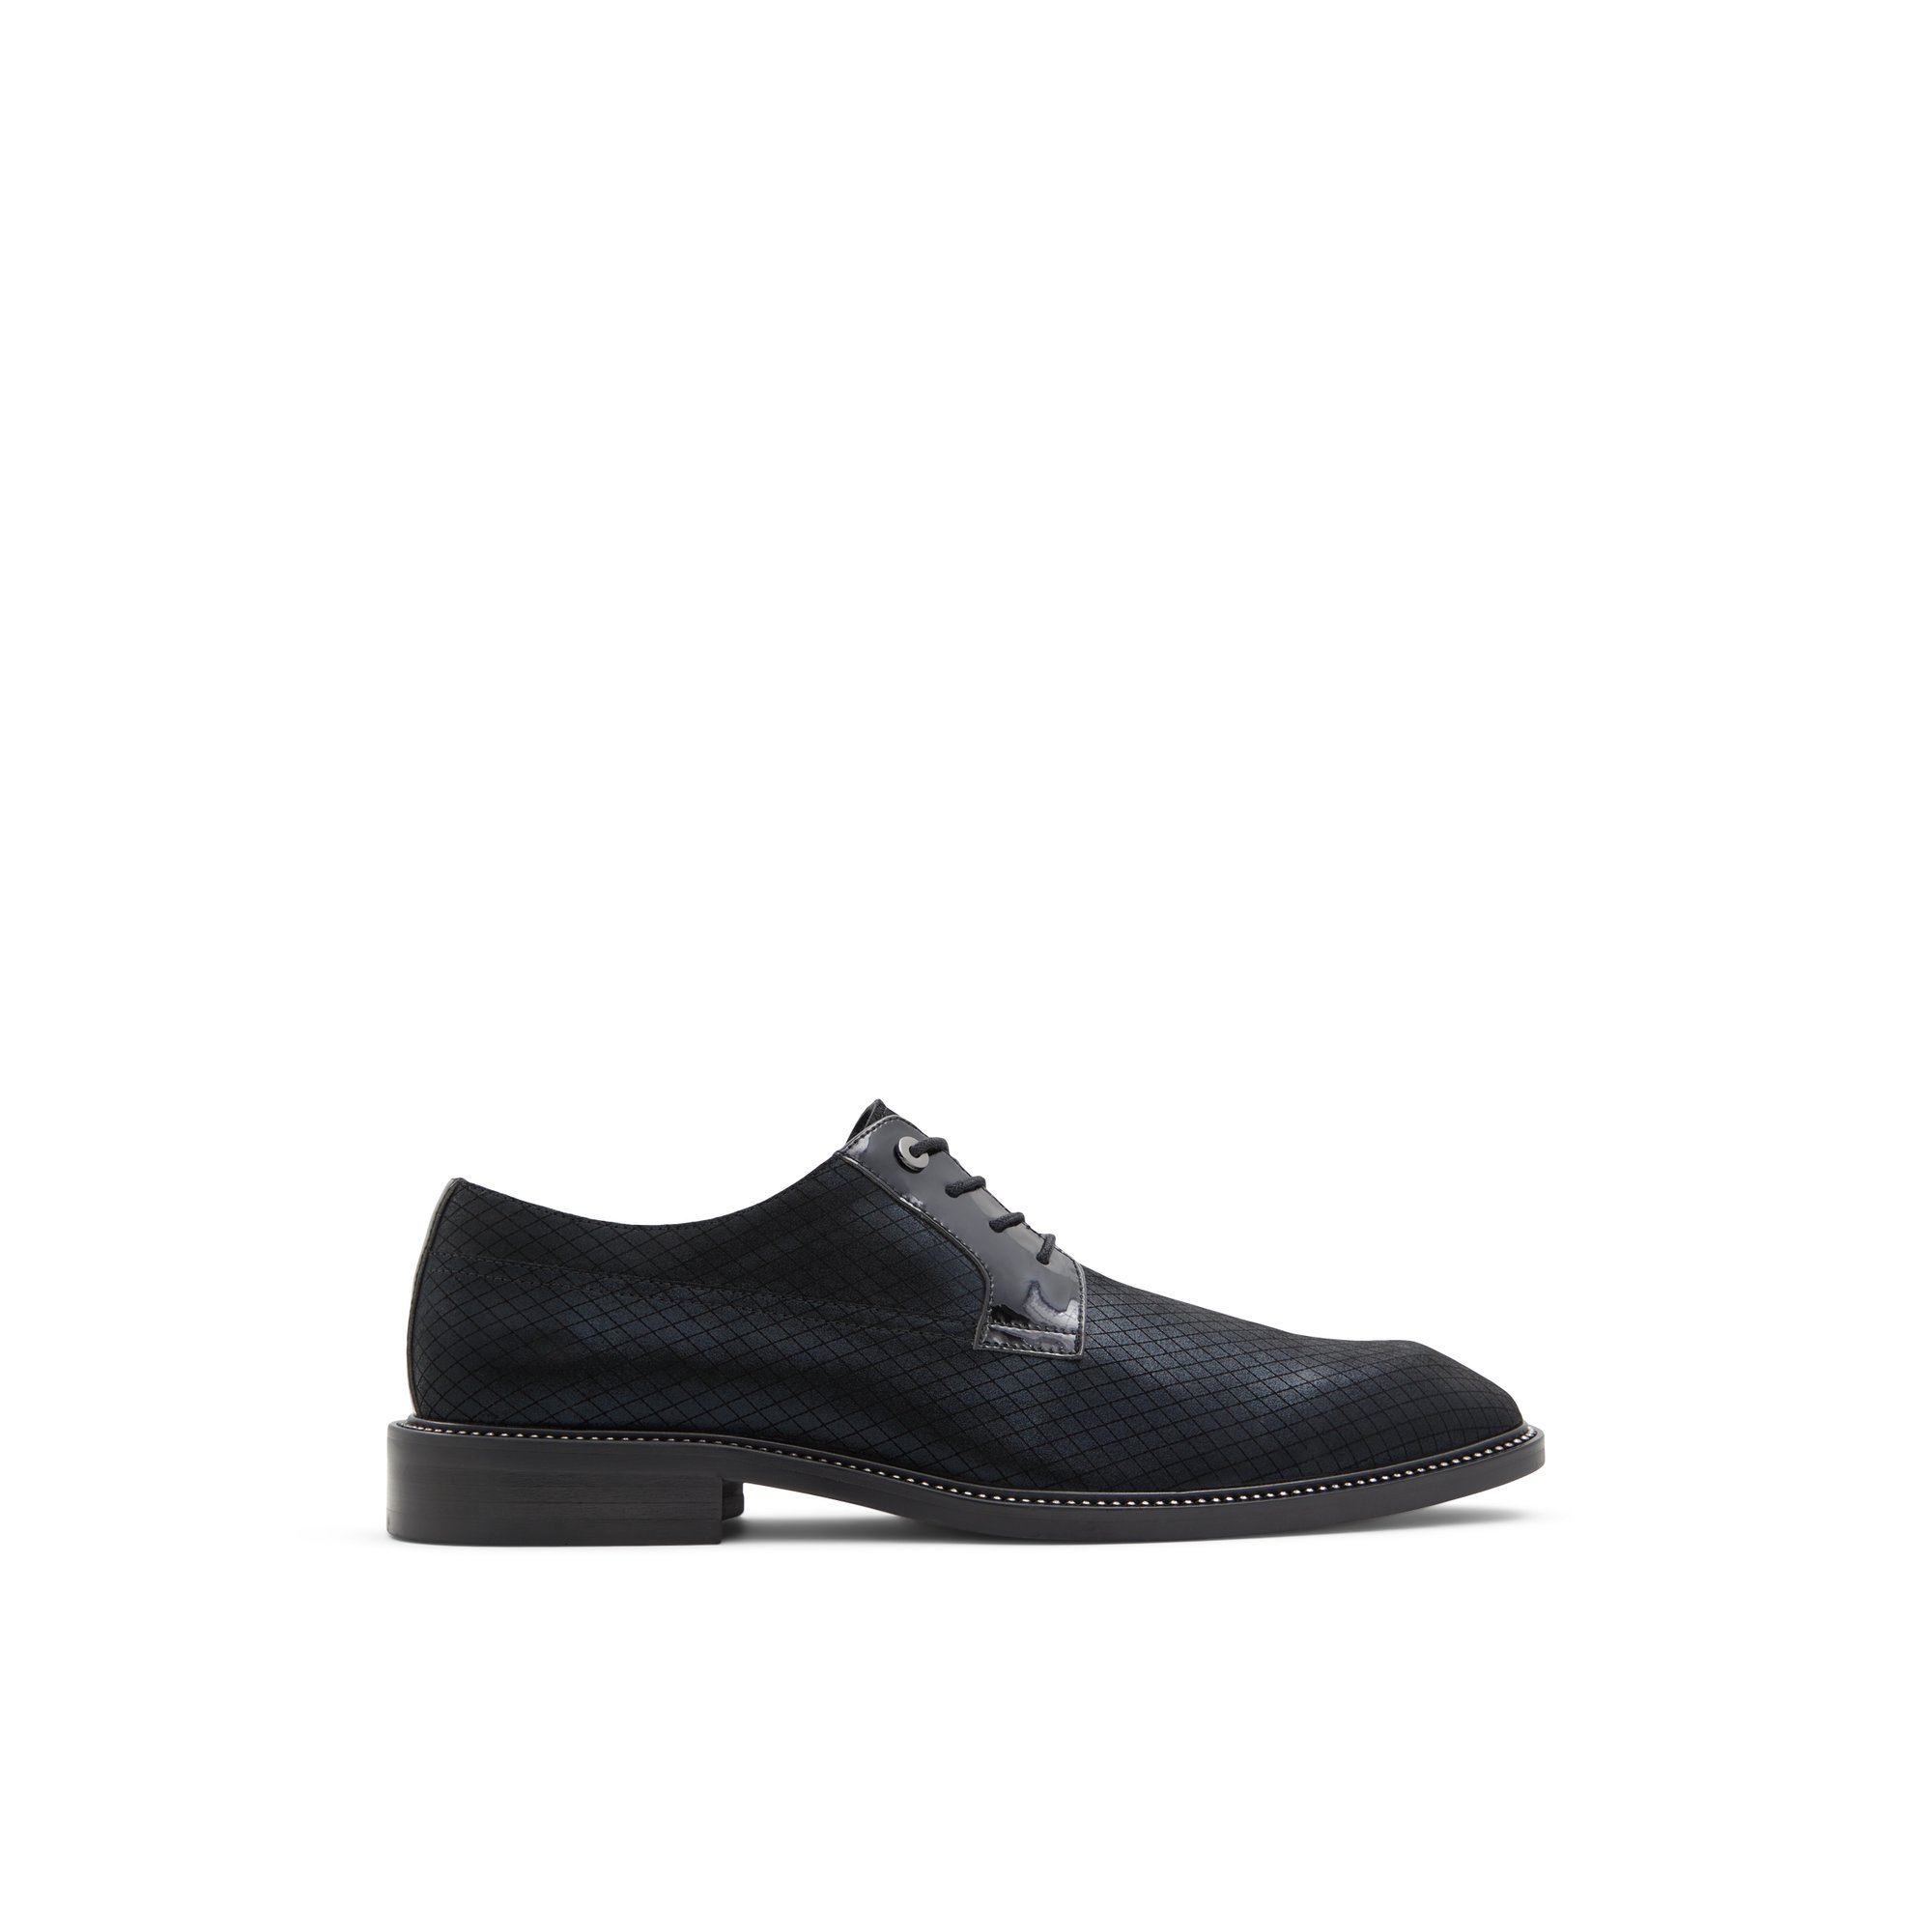 ALDO Boyard - Men's Dress Shoes - Black